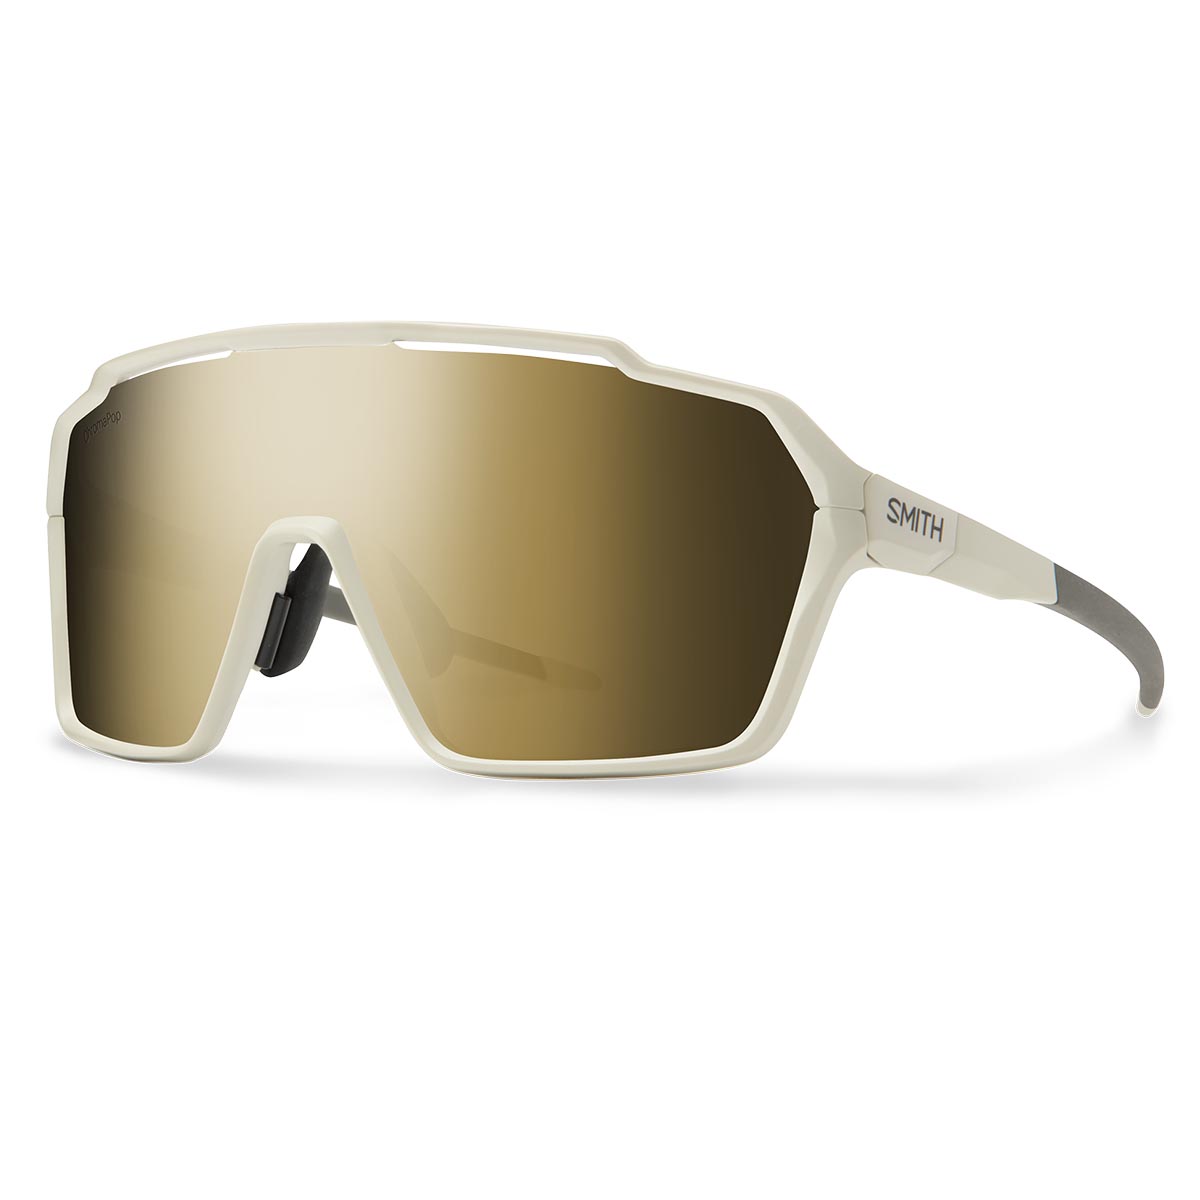 Smith XL MAG Sunglasses